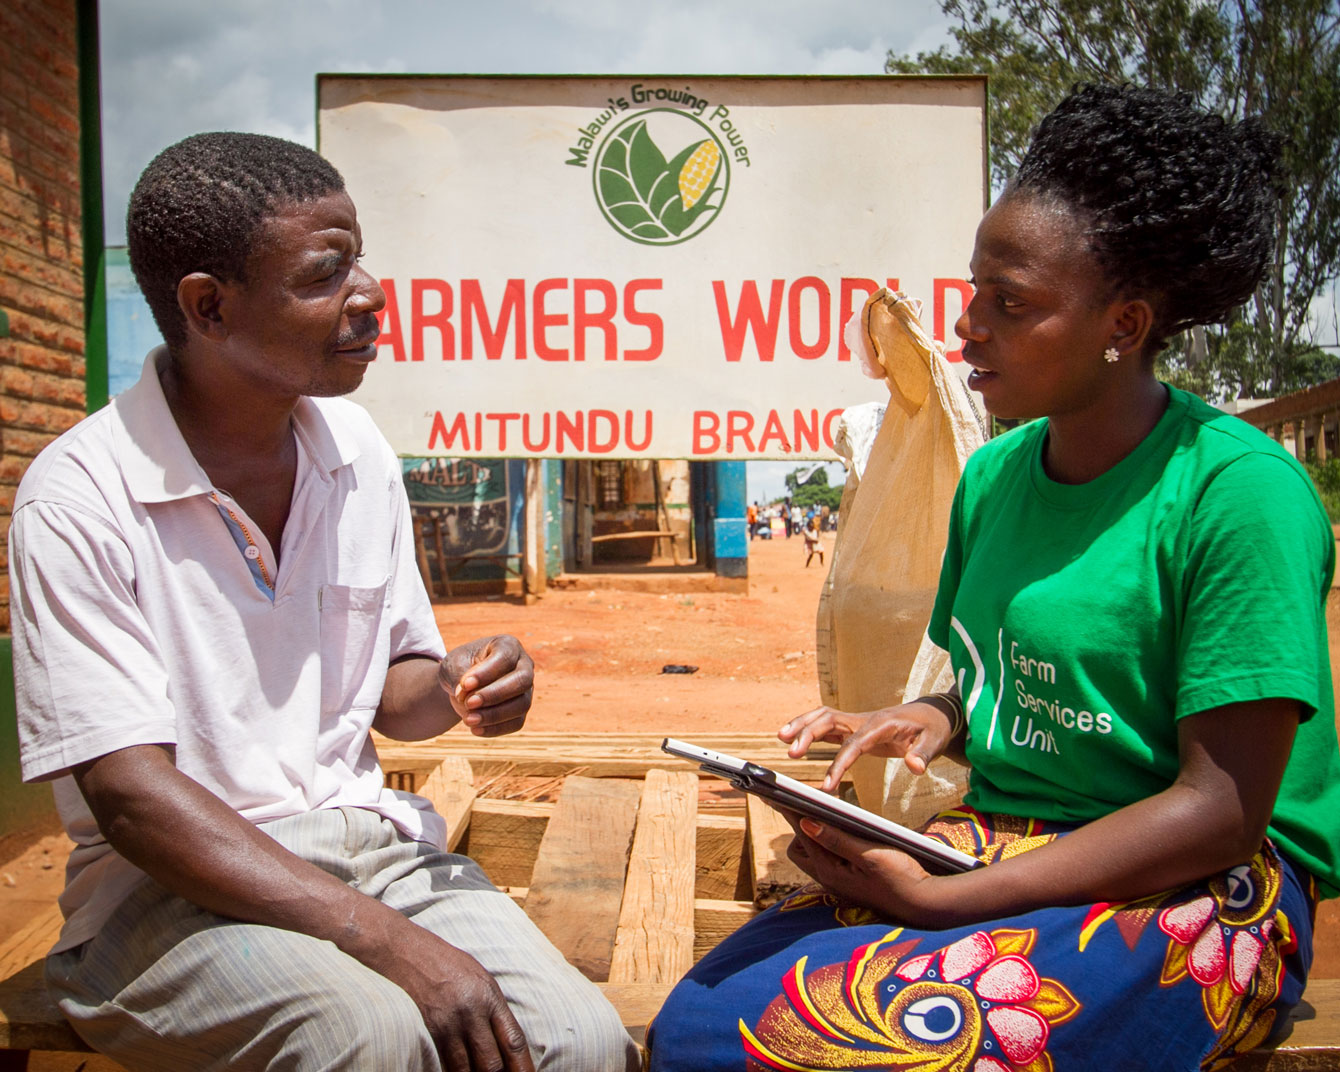 An FSU extension worker interviews a farmer outside one of the Farmer World shops